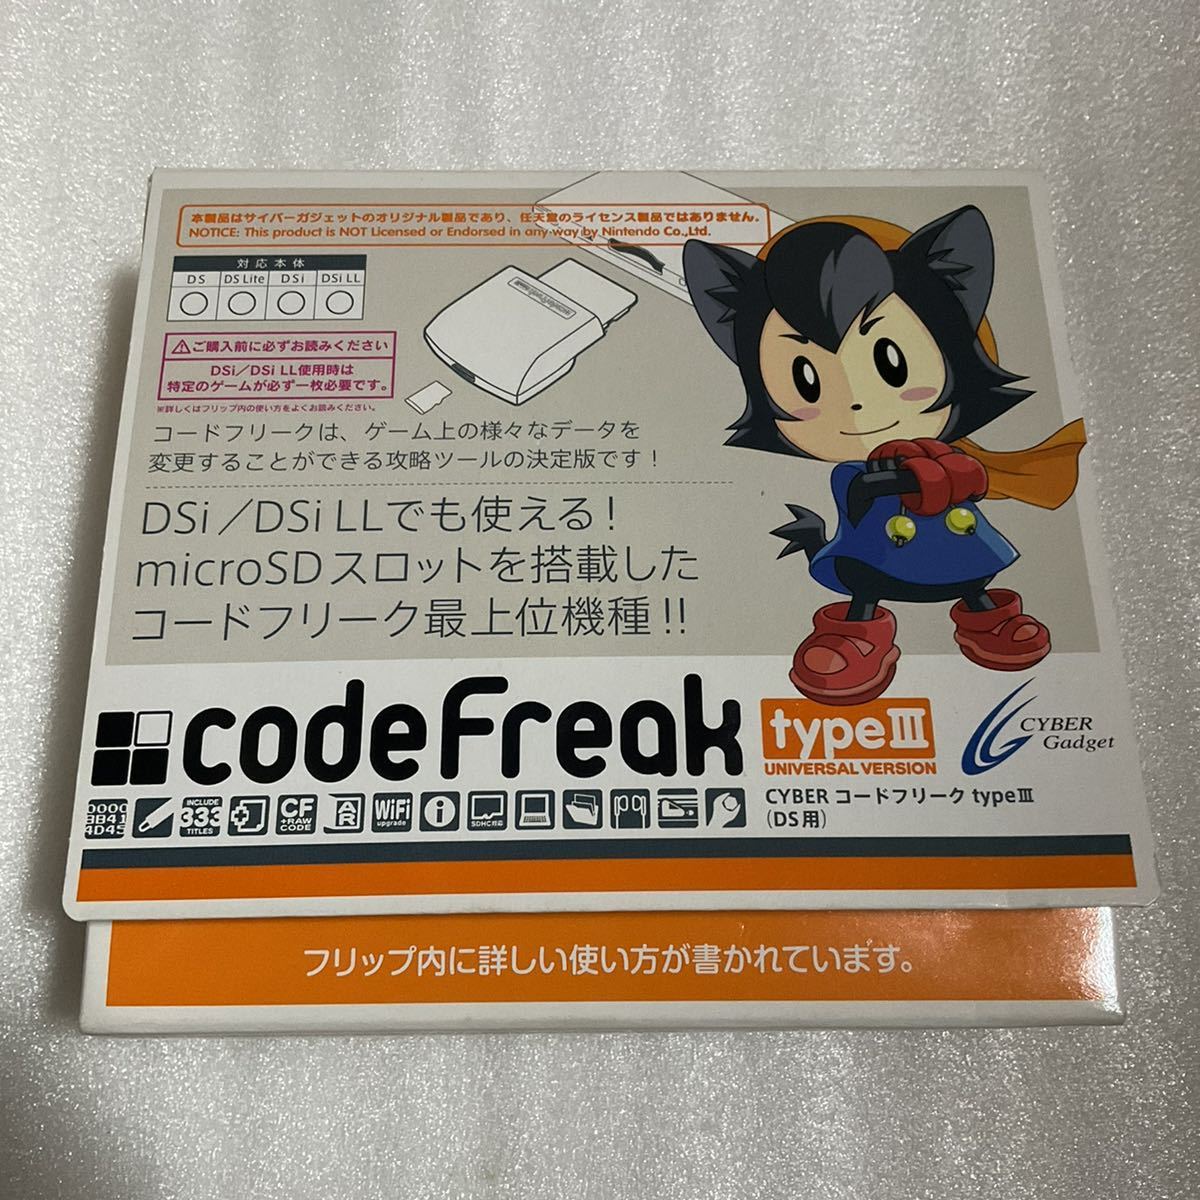 CYBER コードフリーク typeⅢ (DS用) Code freak type3